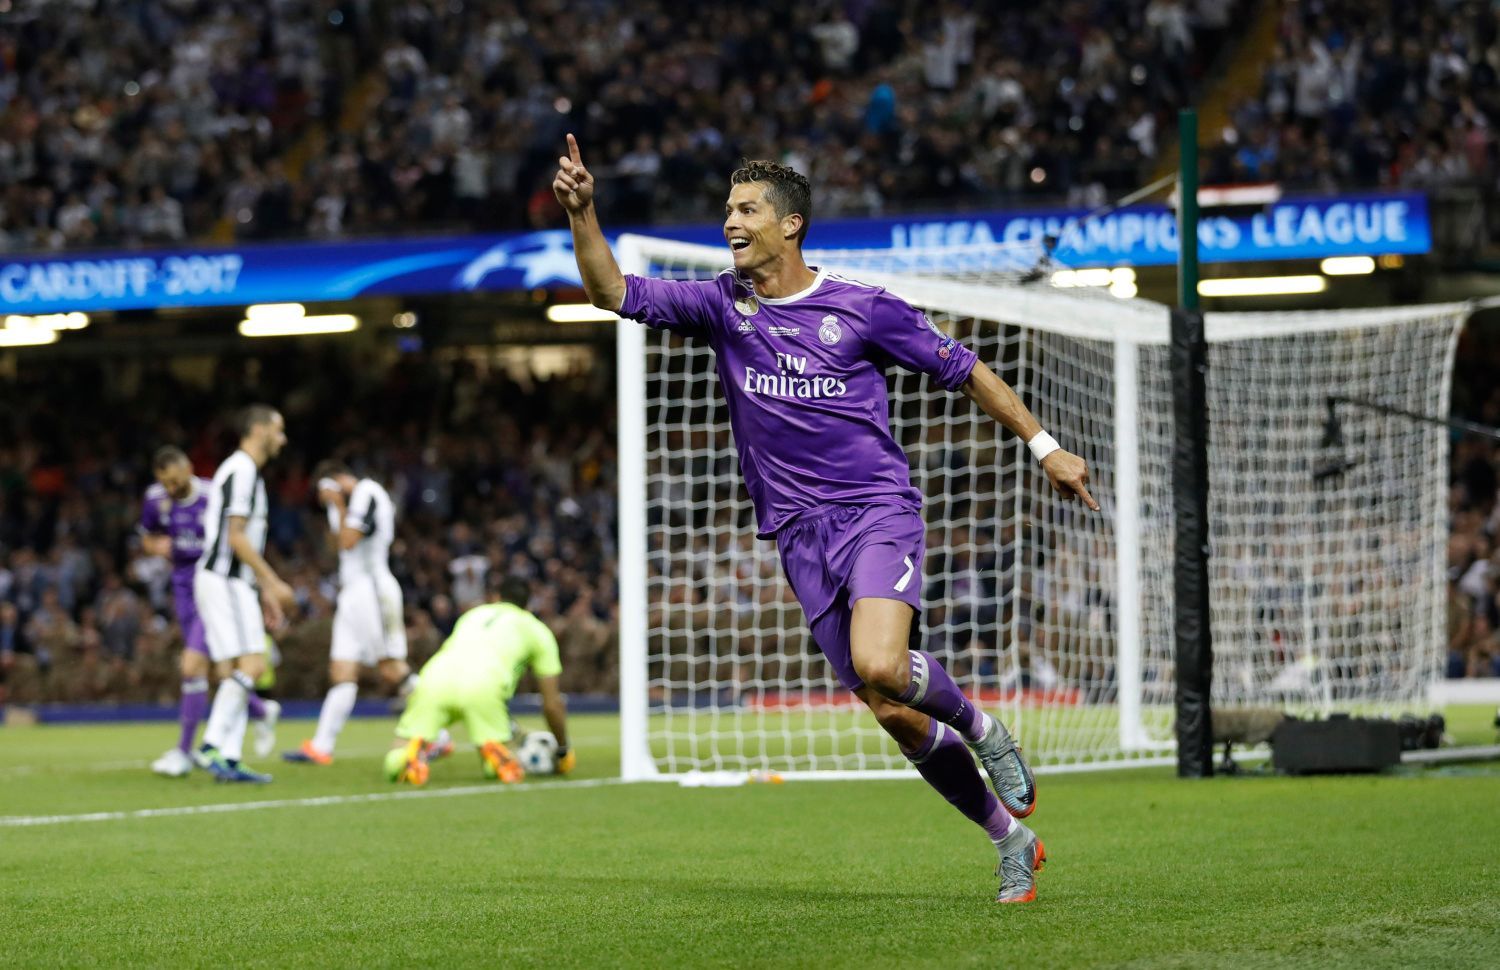 Finále LM, Real-Juventus: Cristiano Ronaldo, gól na 3:1